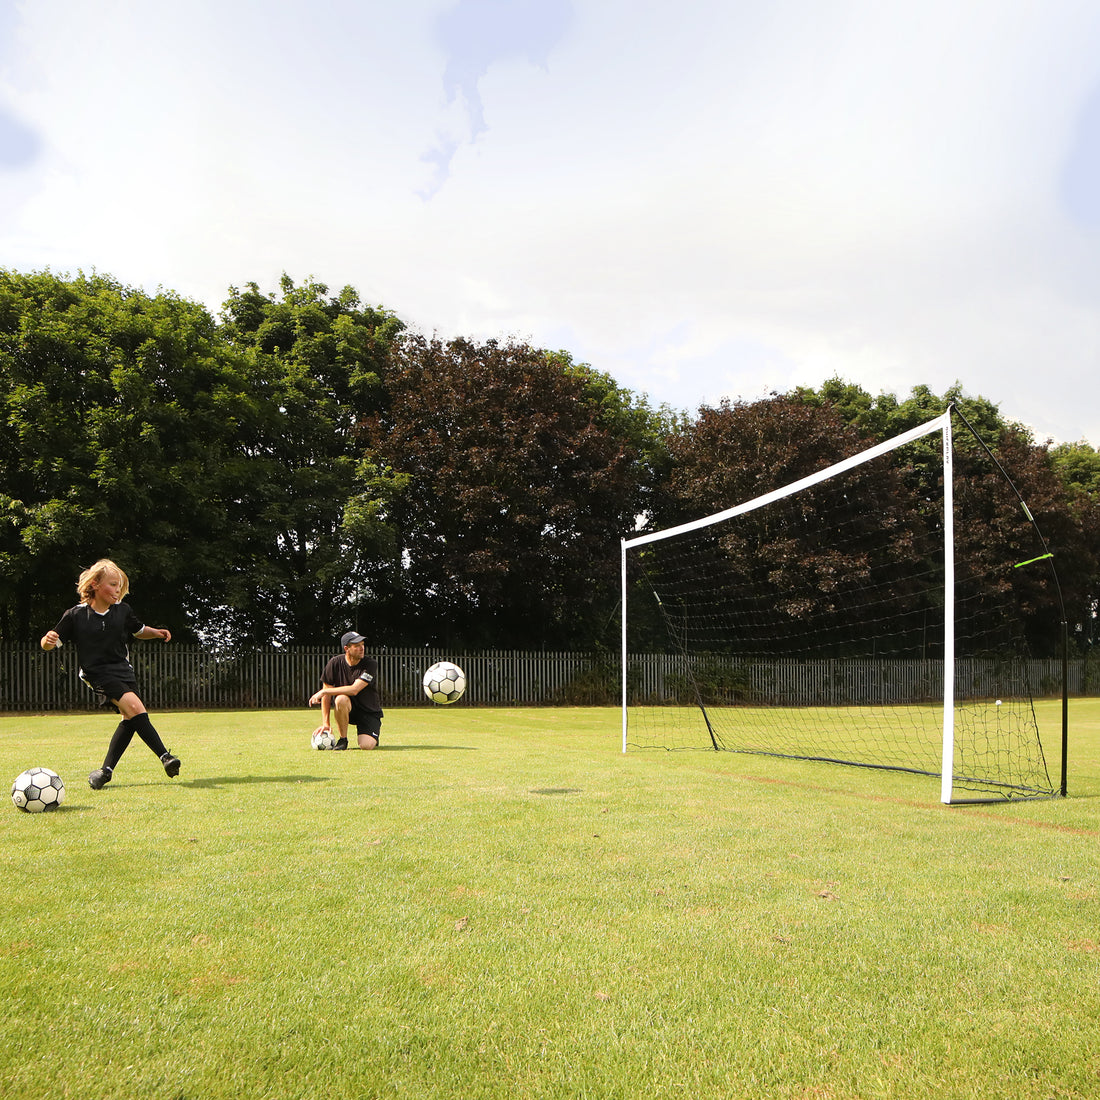 KICKSTER Portable Football Goal 3.7m x 1.8m